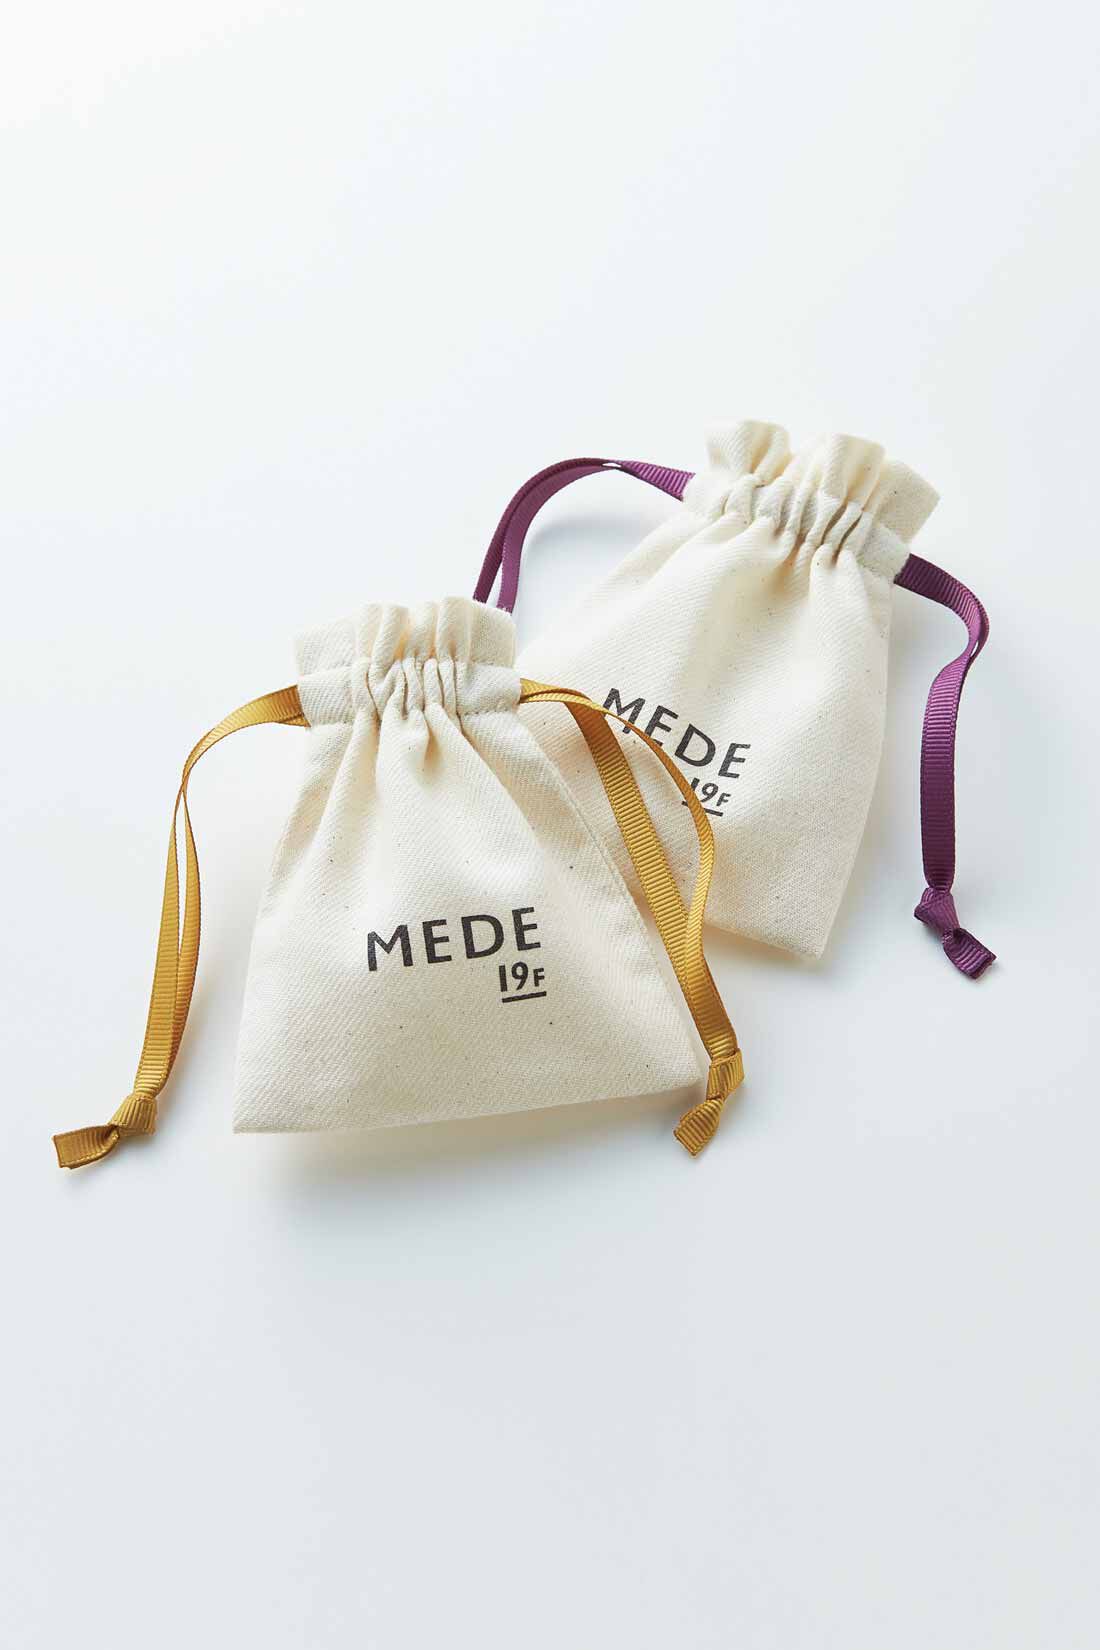 MEDE19F|YPAC for MEDE19F　フランス製陶器ボタンイヤリング type.02|MEDE19Fオリジナルきんちゃくに入れてお届けします。